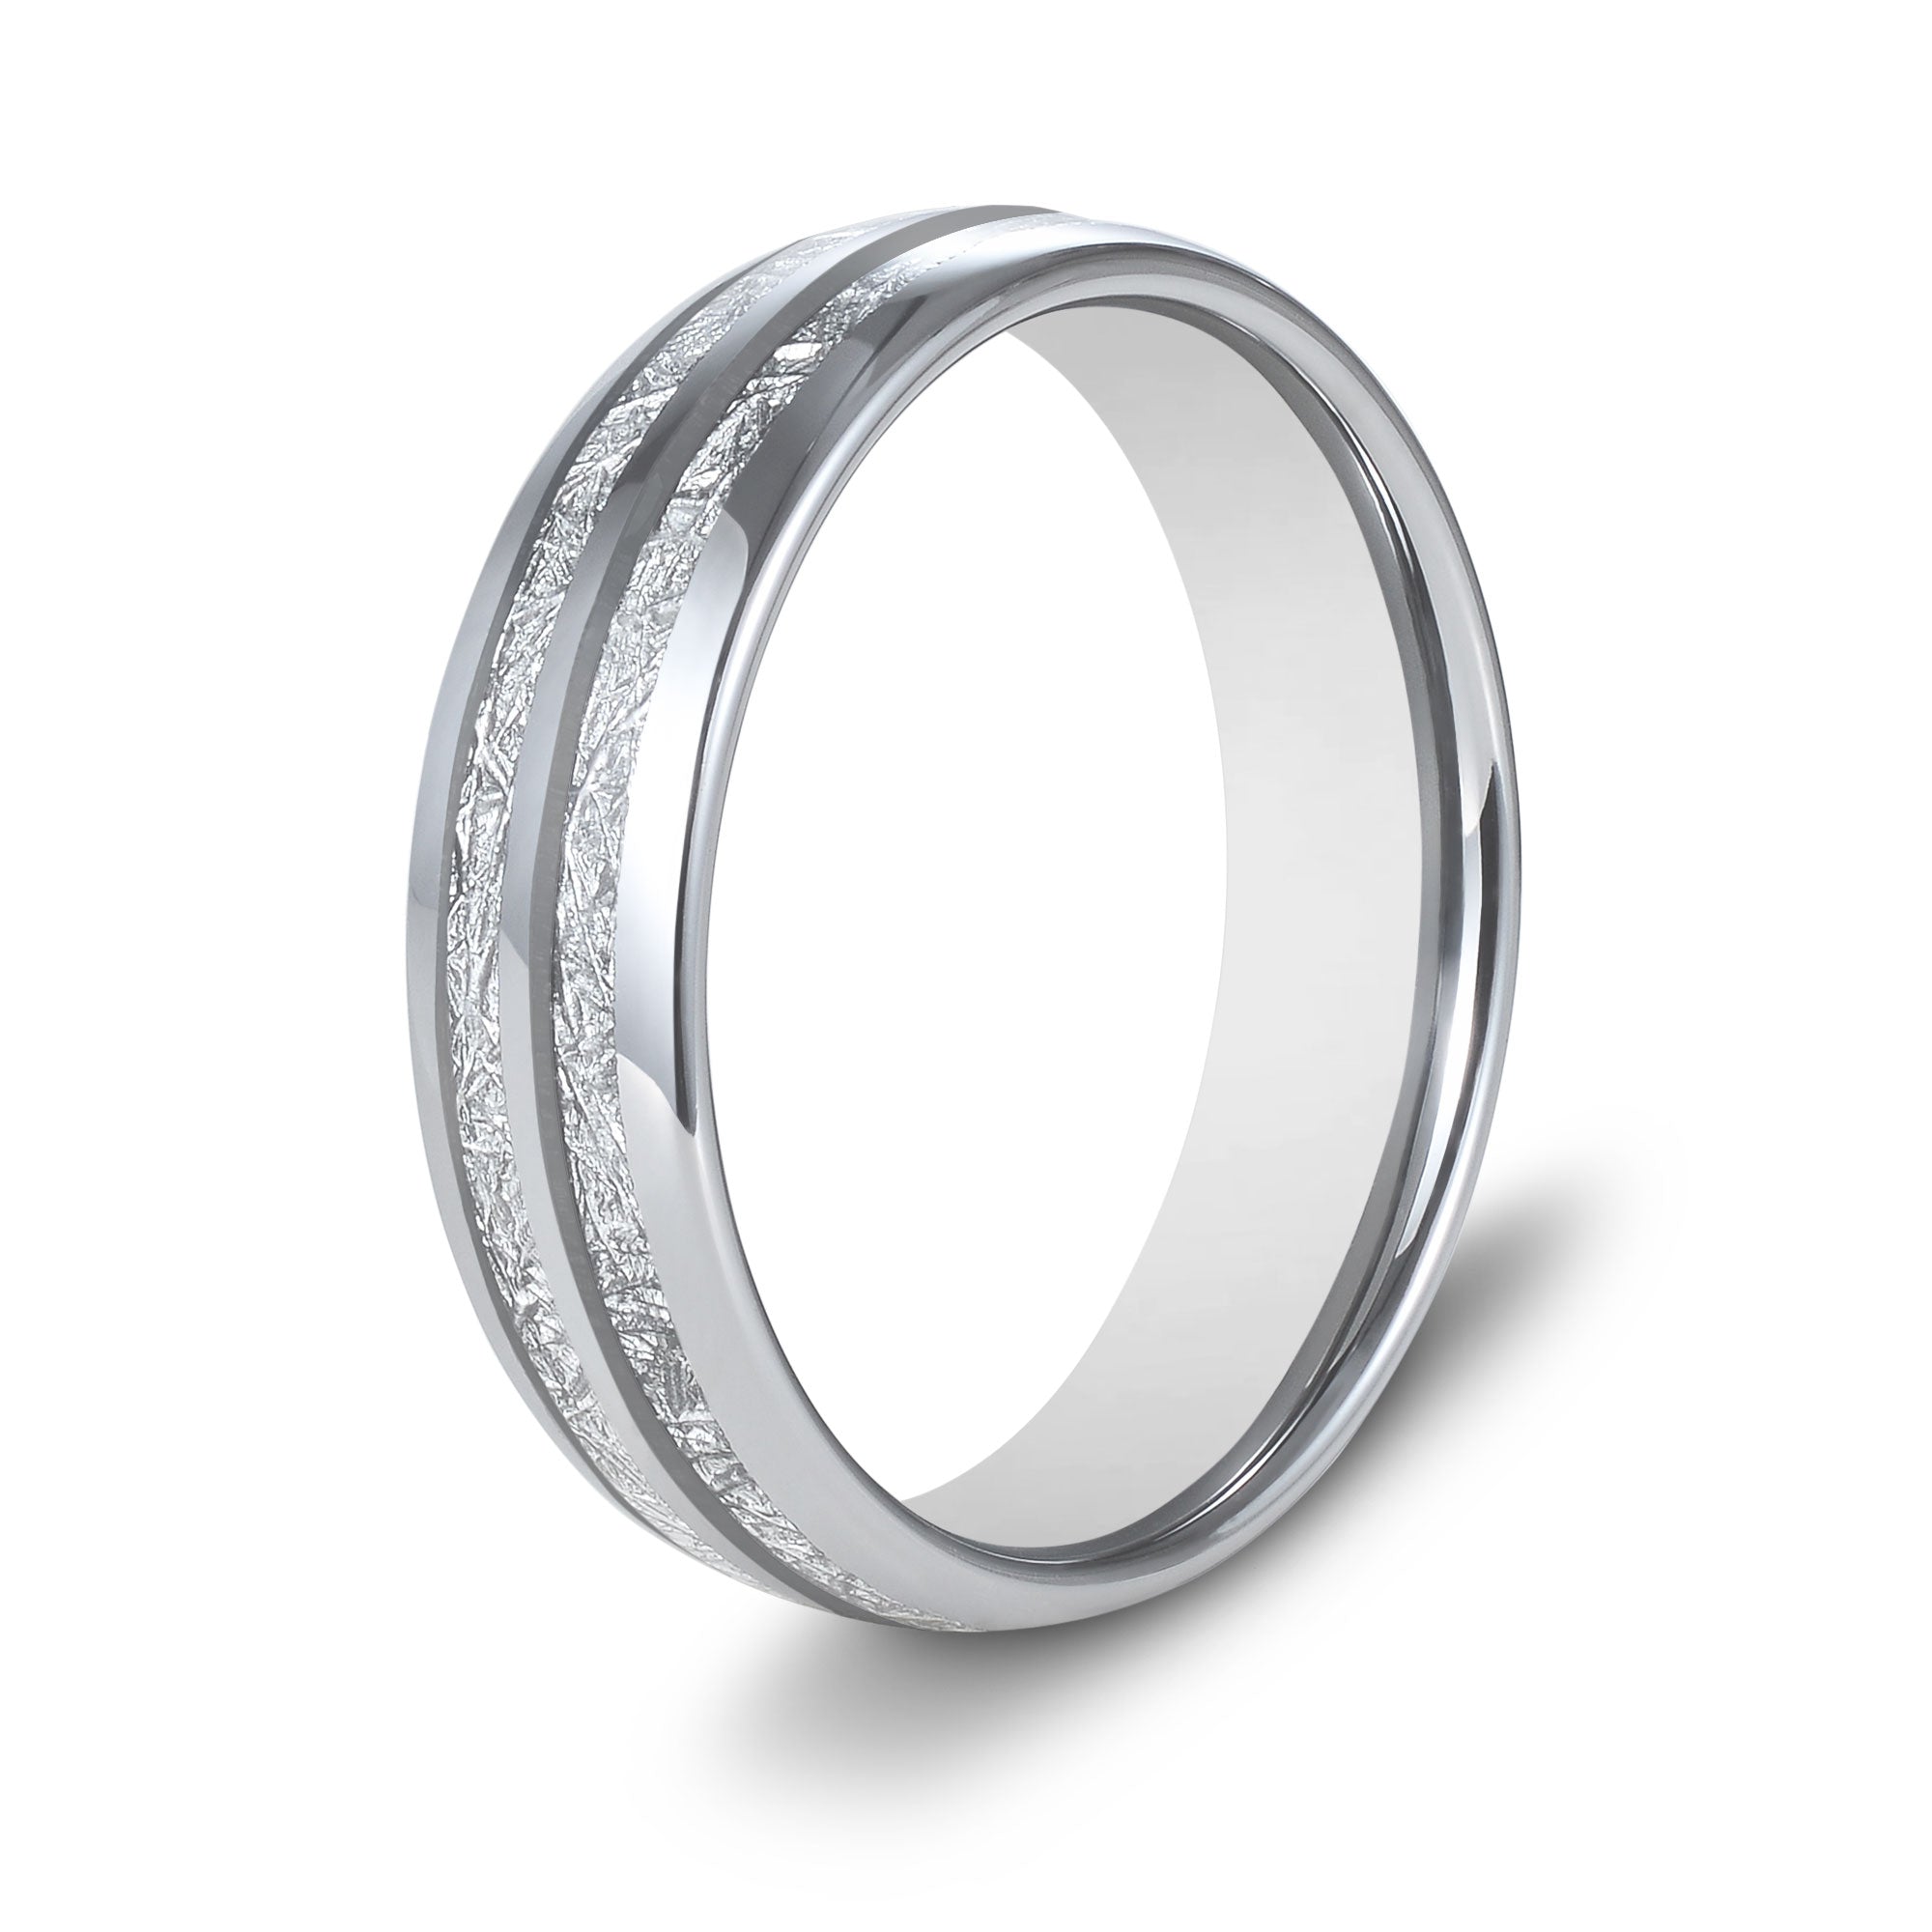 The Illuminate - Silver 6mm Meteorite Tungsten Ring